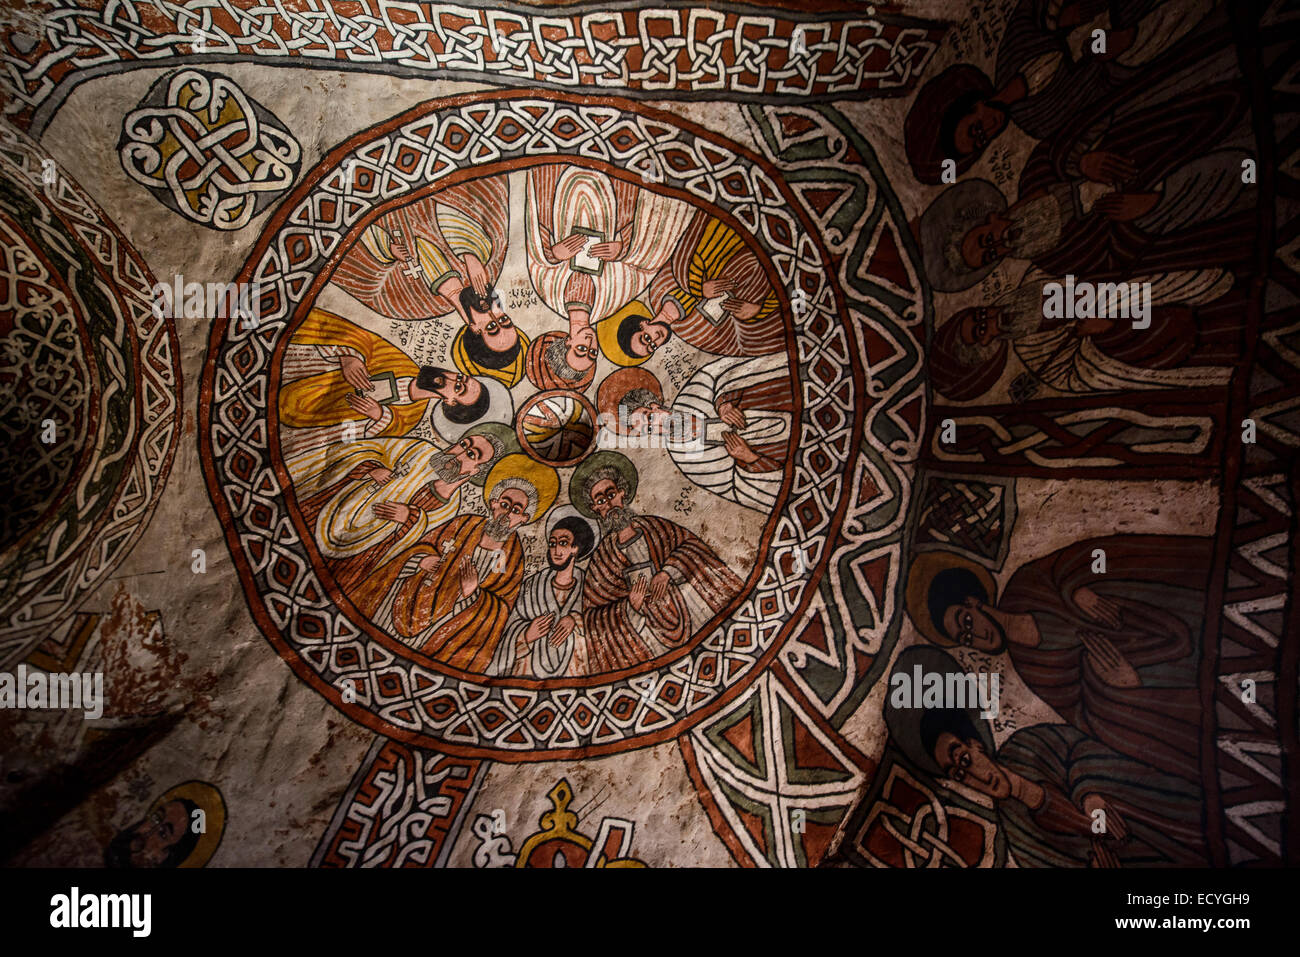 Frescoes of Abuna Yemata rock-hewn church,Tigray, Ethiopia Stock Photo